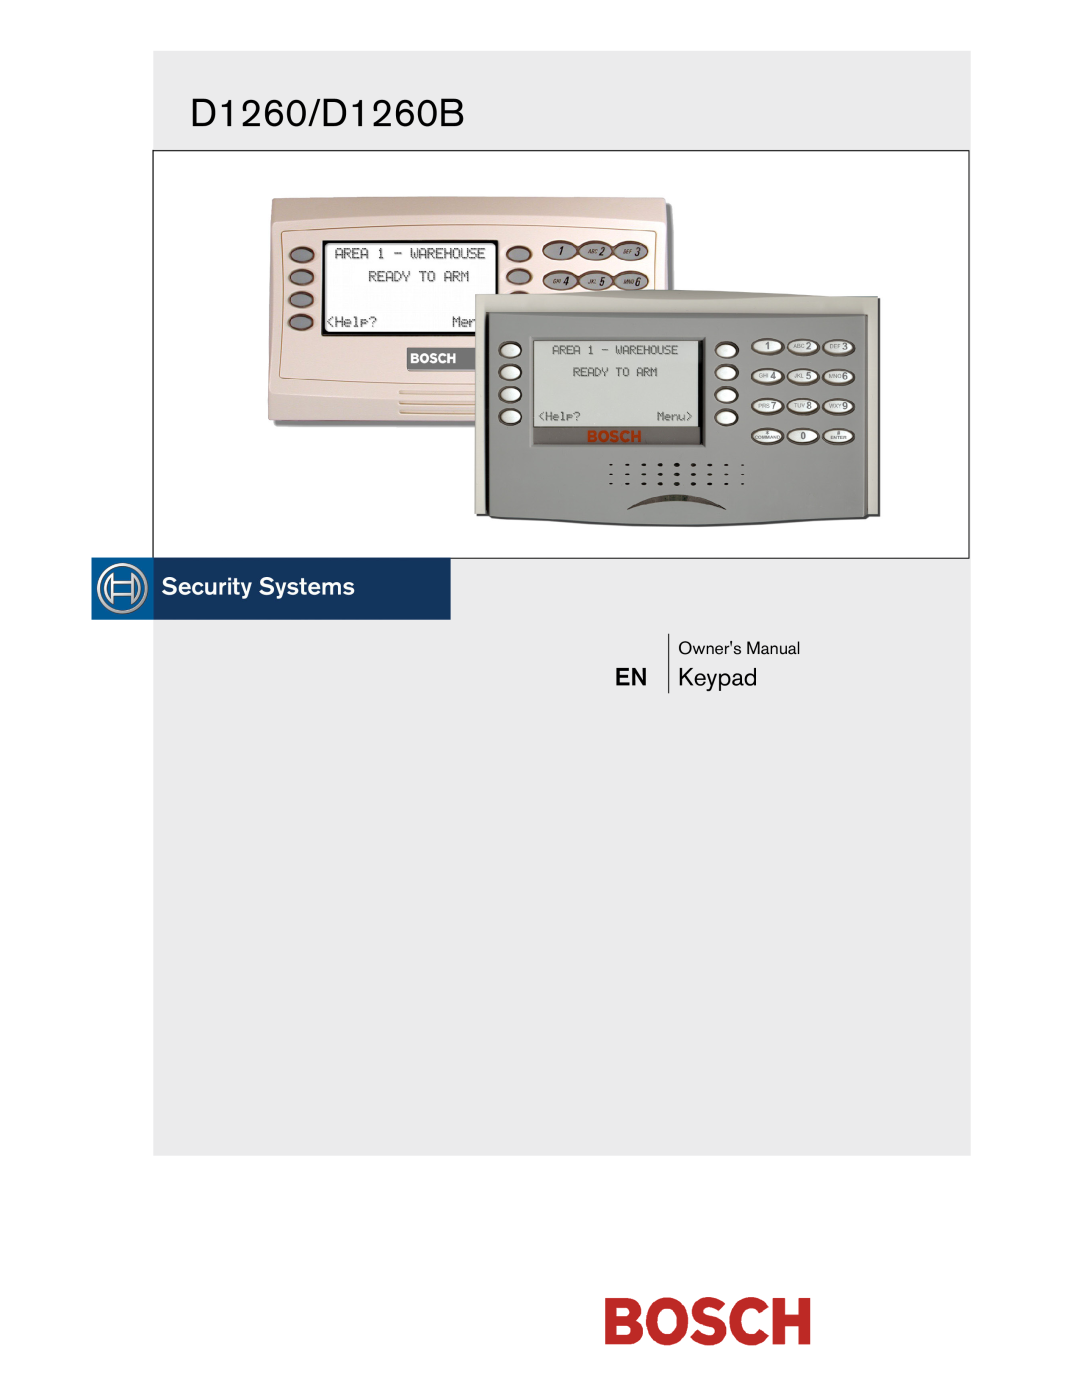 Bosch Appliances owner manual D1260/D1260B, Keypad, Owners Manual 